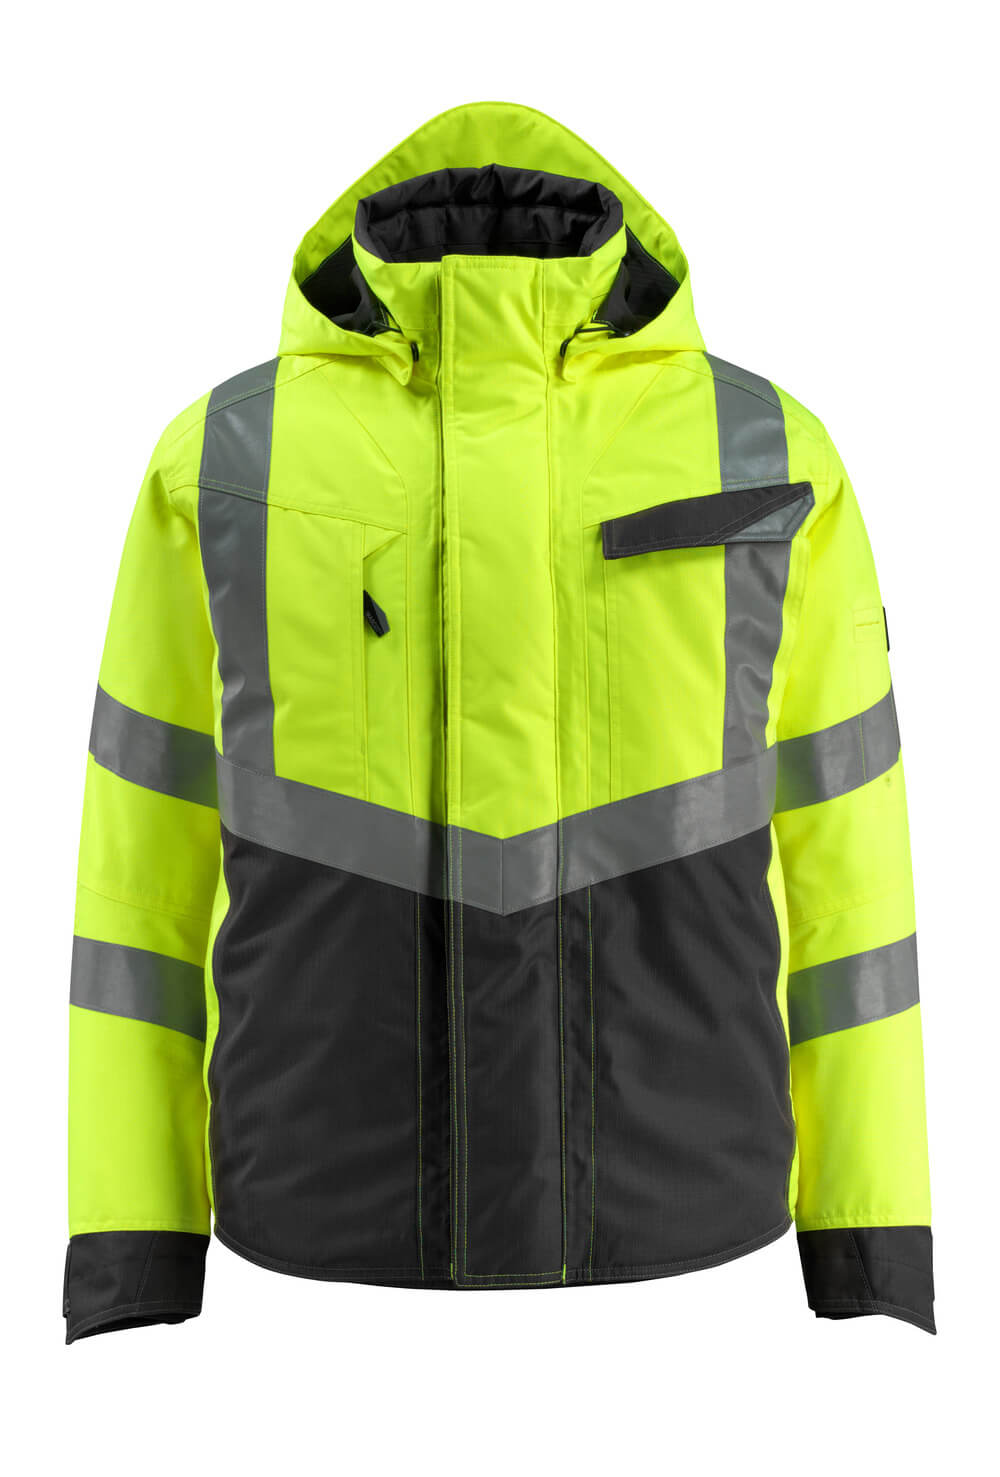 Mascot SAFE SUPREME  Hastings Winter Jacket 15535 hi-vis yellow/black